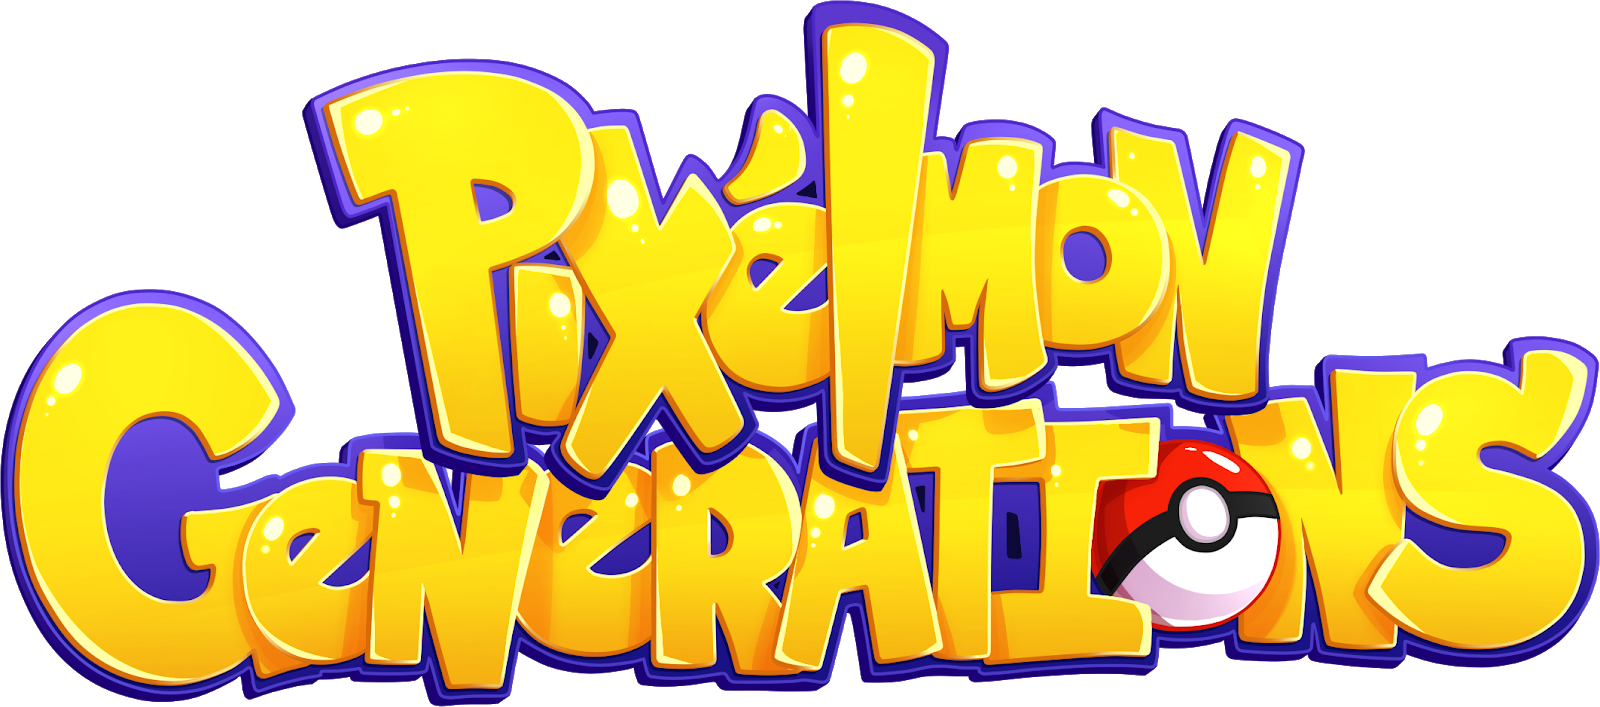 How To Install Pixelmon Generations - Pixelmon Generations 1.12 2 (1600x707)